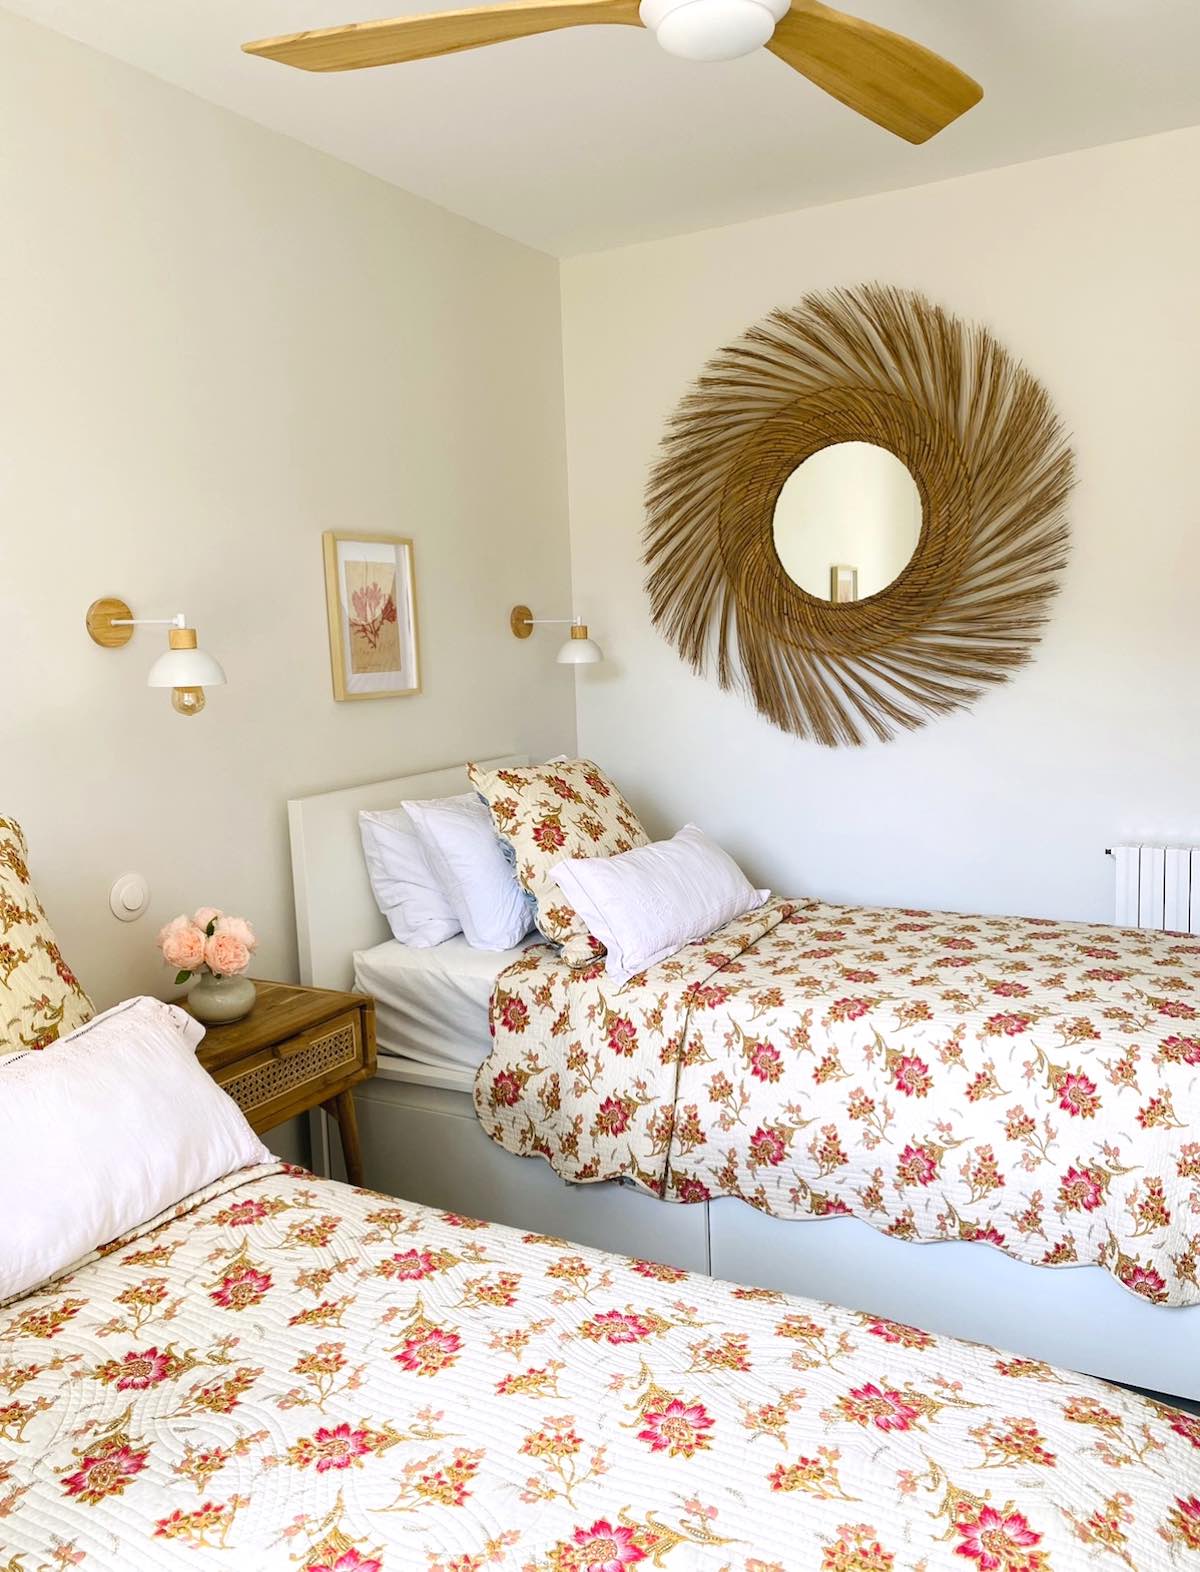 The second Bedroom at Maison Coli a vacation rental in Saint Gilles Croix de Vie